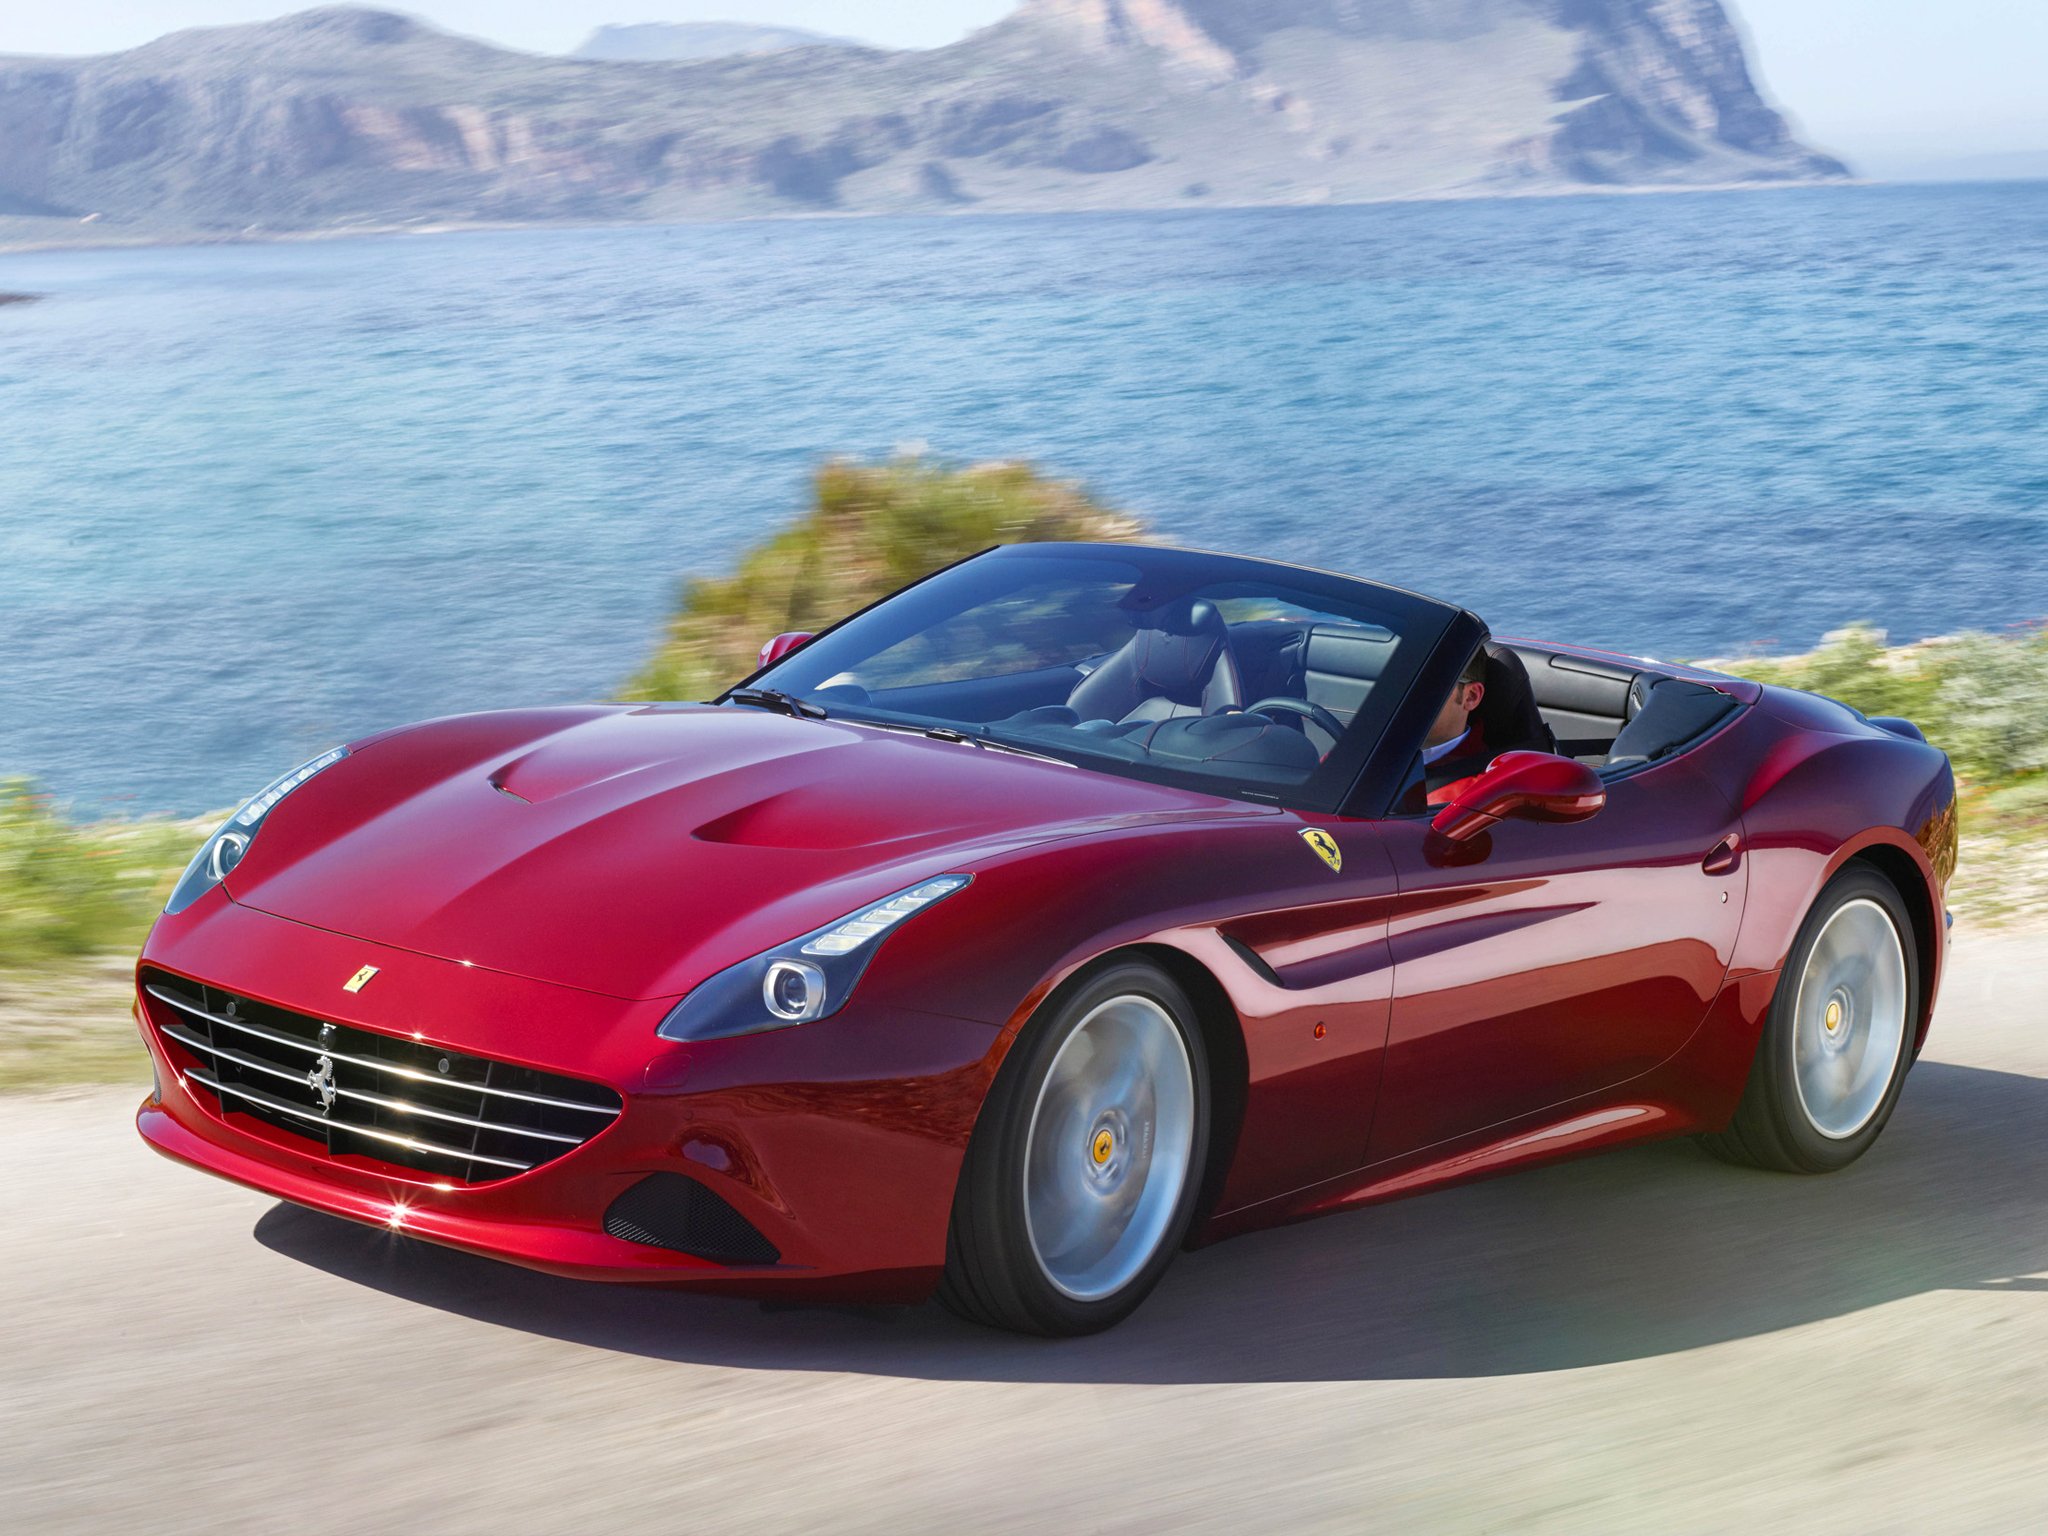 2014, Ferrari, California t, Supercar, California,  17 Wallpaper